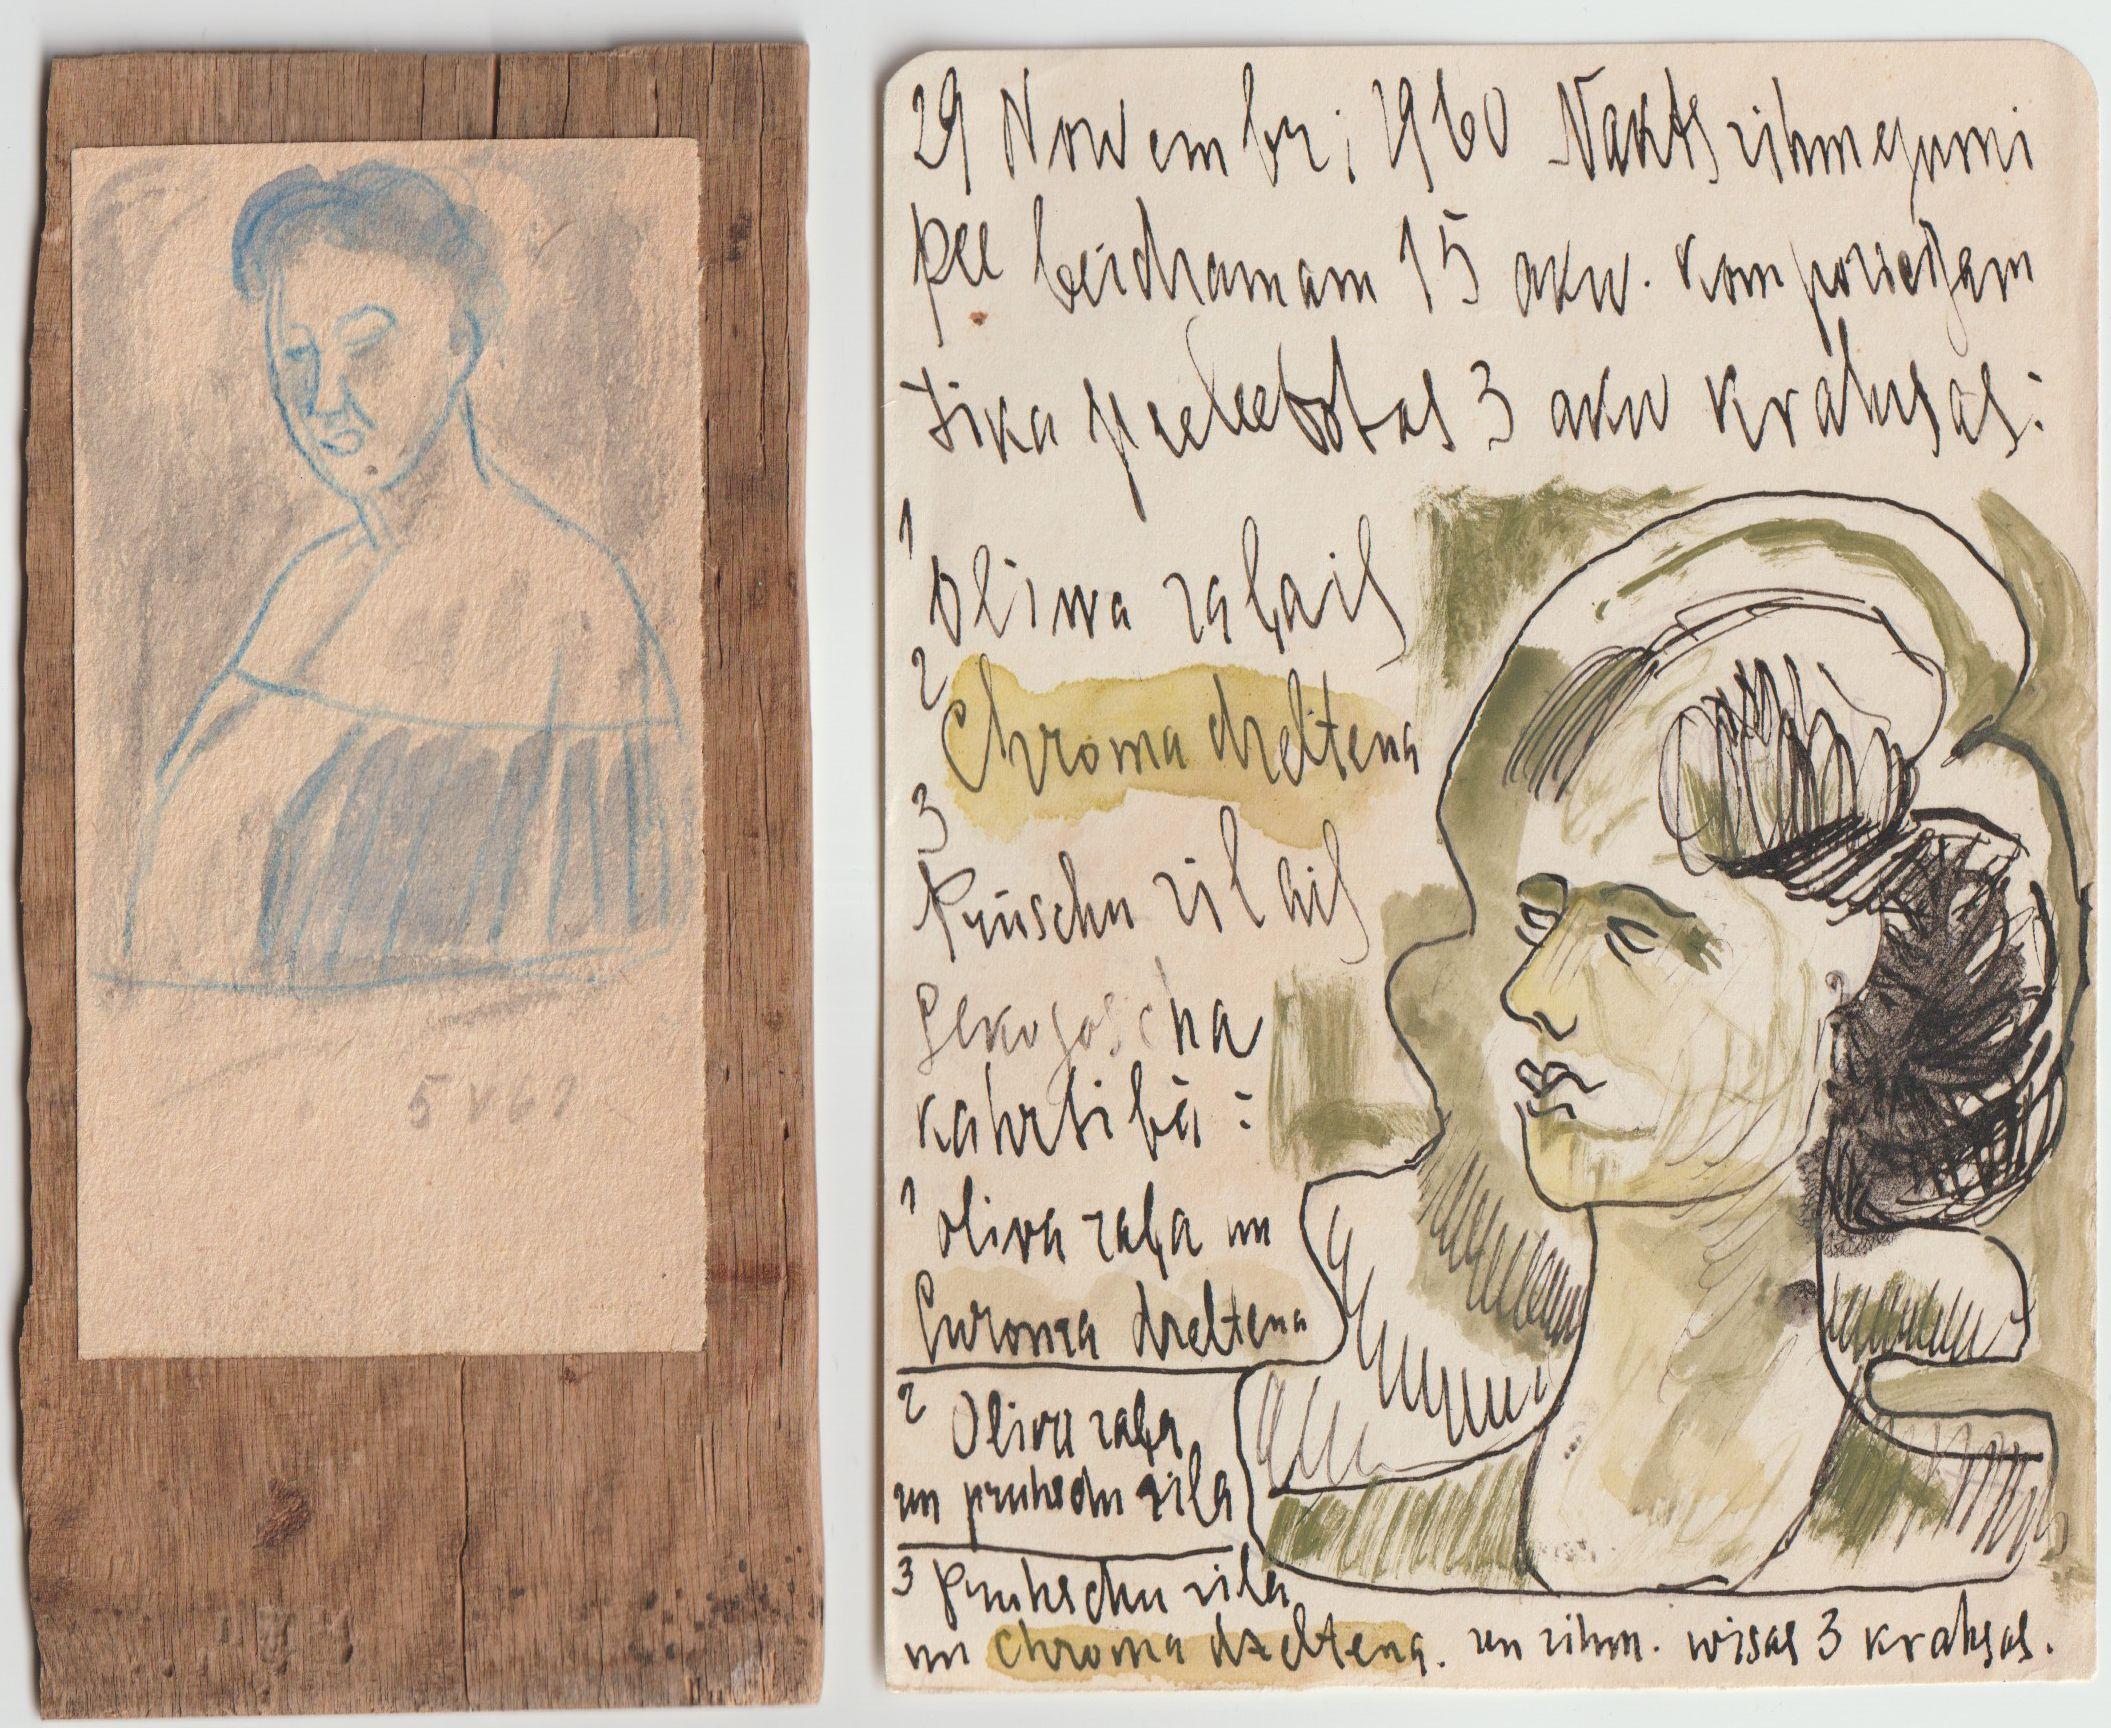 Adolfs Zardins Portrait Painting – Porträts von Porträts. 2.tlg., Papier, Mischtechnik, 10,2x5,3 cm, 13,9x10,2 cm